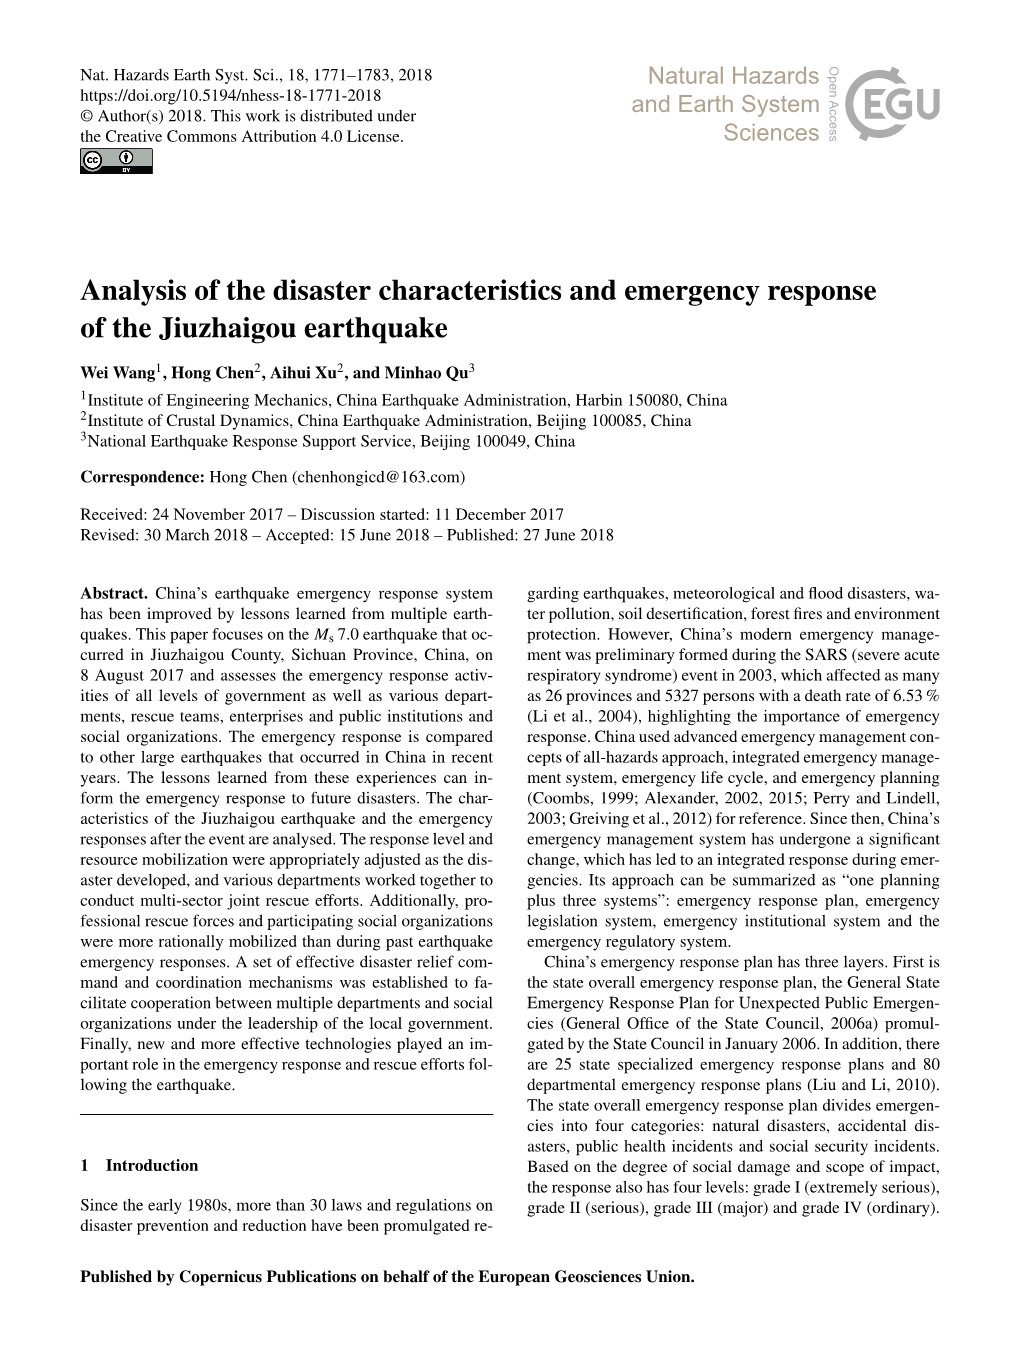 Analysis of the Disaster Characteristics and Emergency Response of the Jiuzhaigou Earthquake